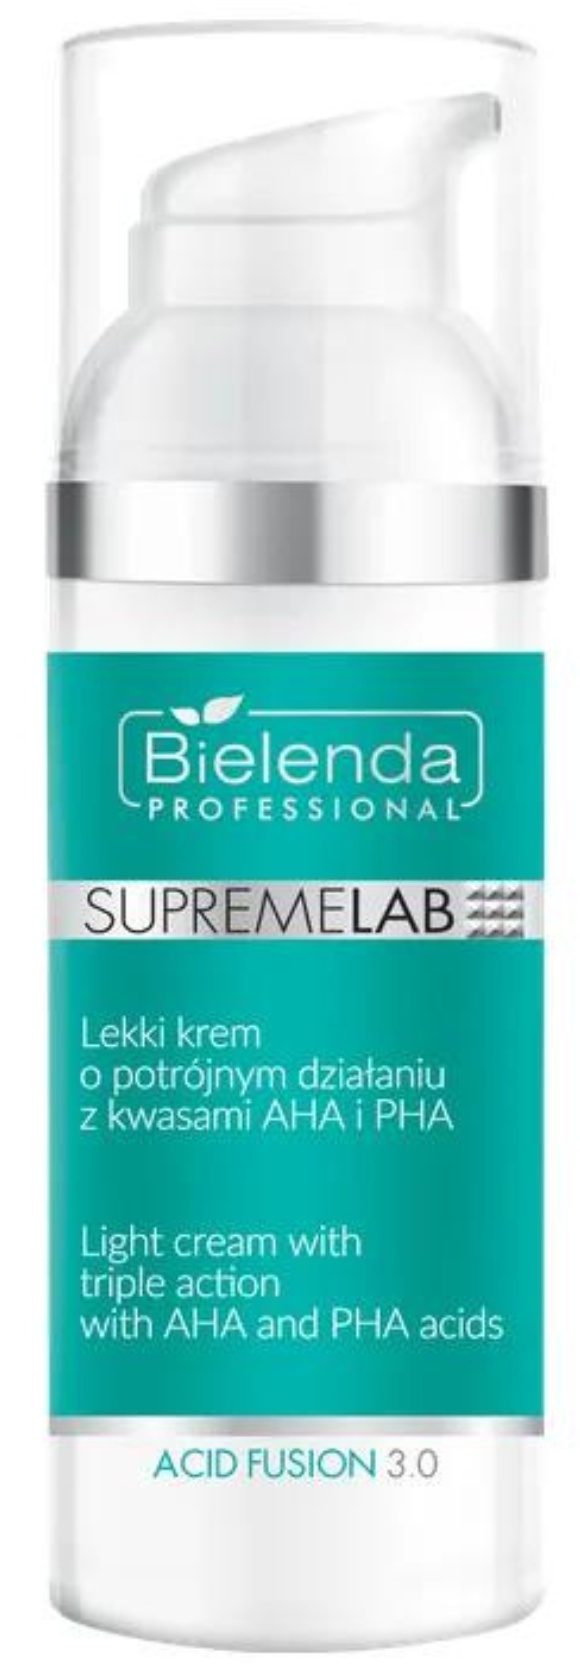 Bielenda Professional Supremelab Acid Fusion 3.0 Light Cream With Triple Action